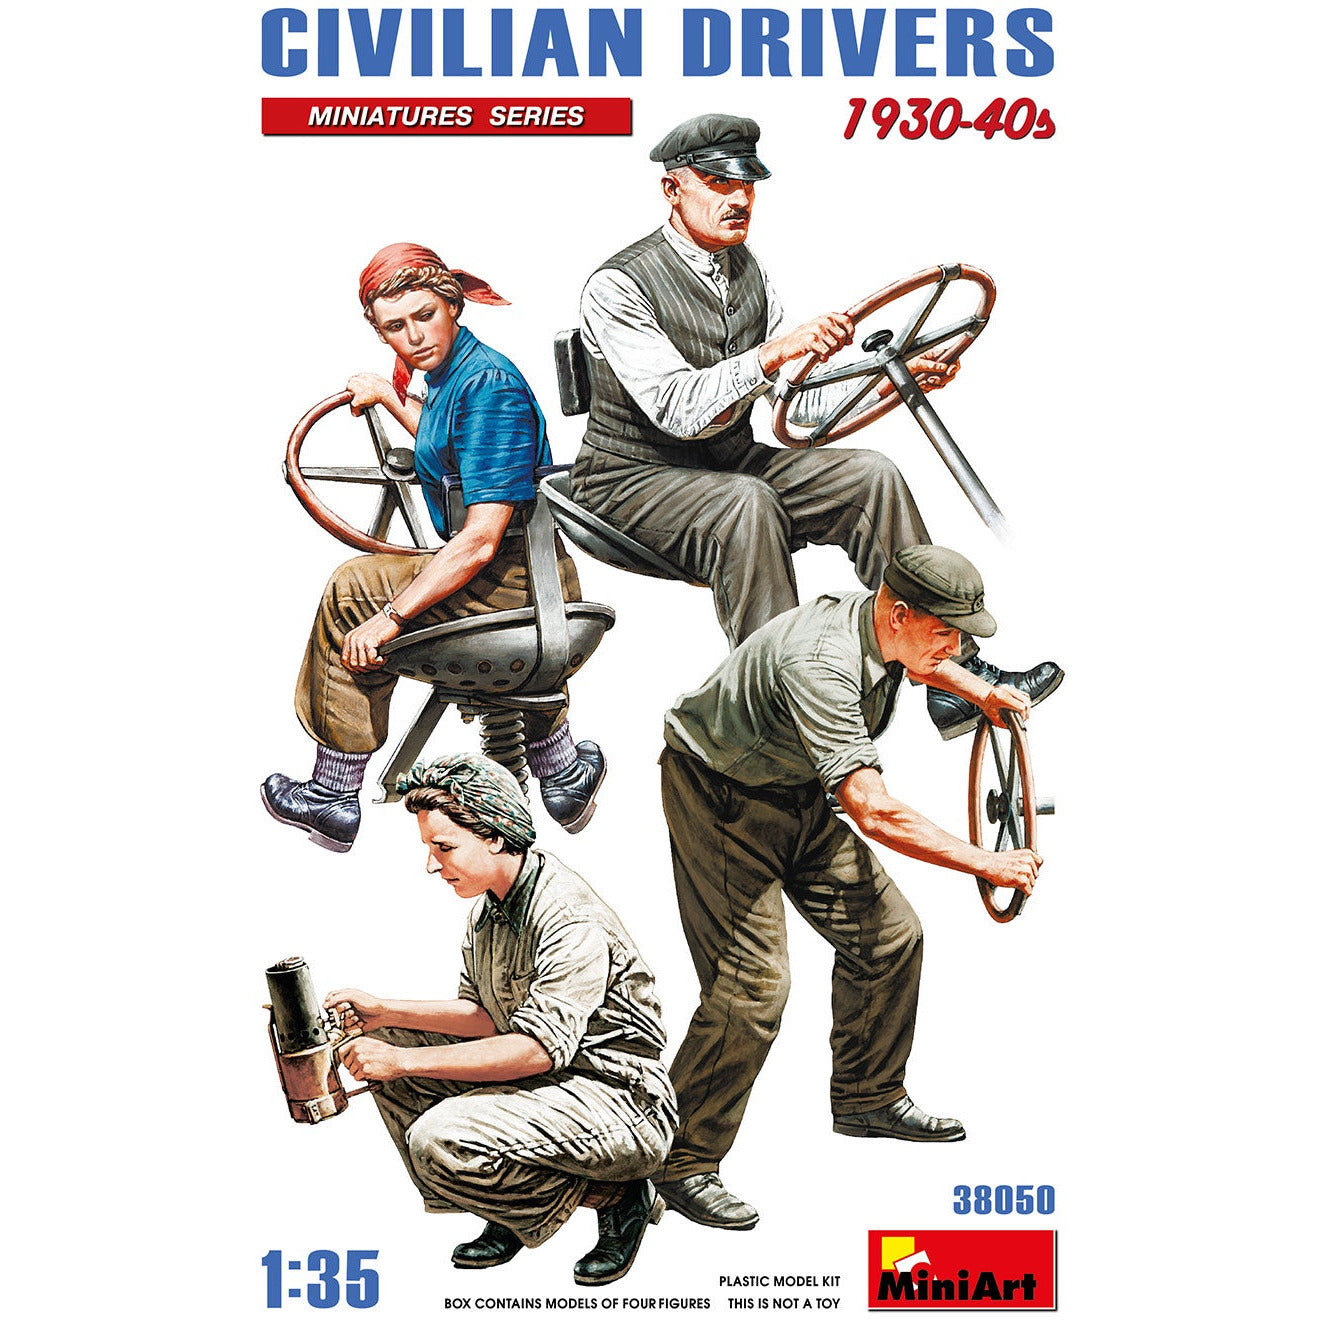 Civilian Drivers 1930-40s #38050 1/35 Figure Kit by MiniArt